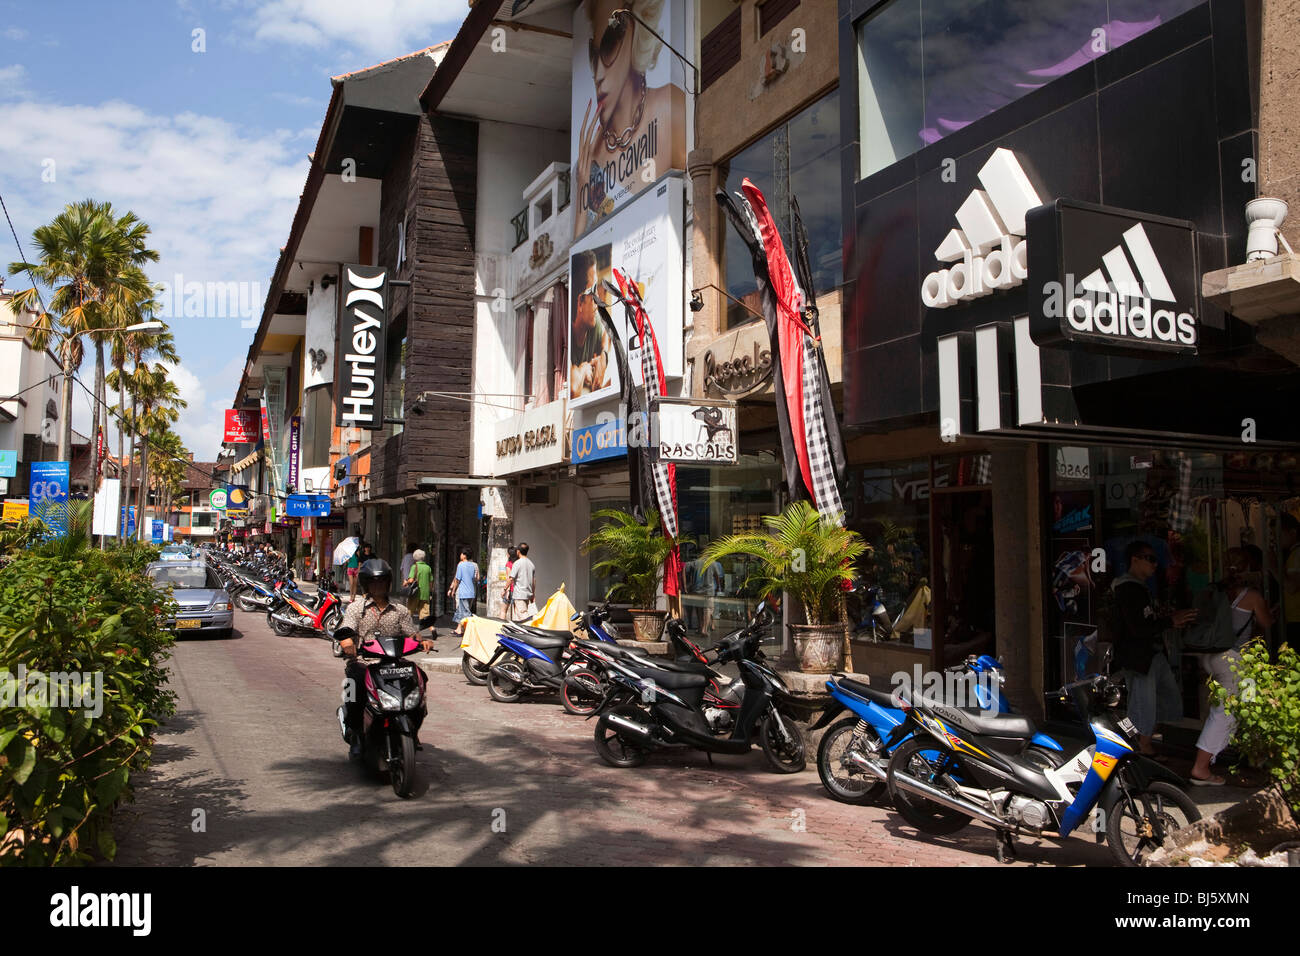 Indonesia, Bali, Kuta Square shopping complex, Adidas shop Stock Photo